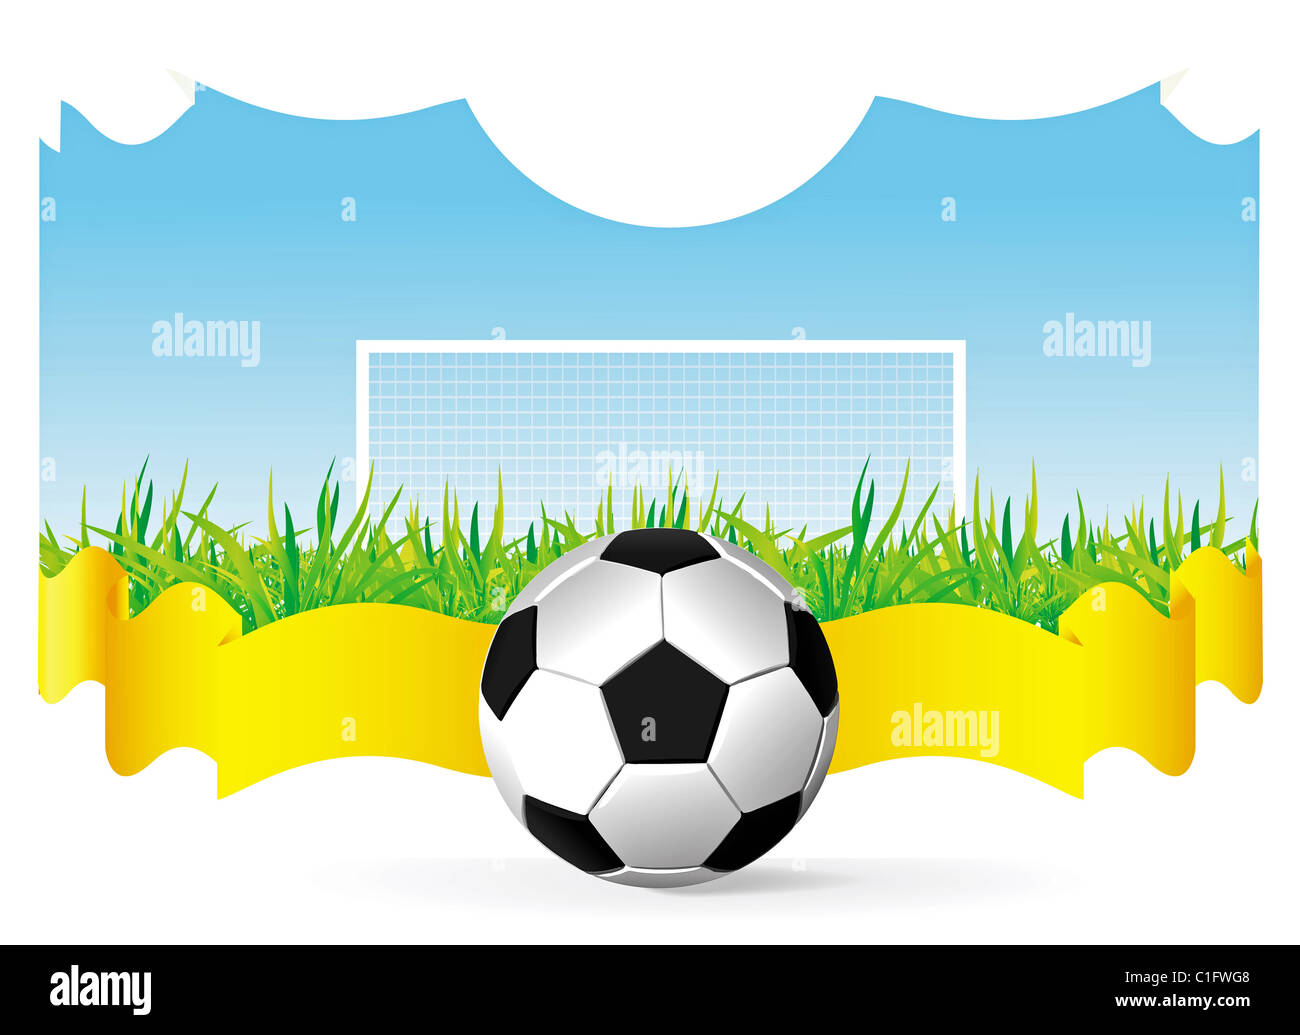 Vector football background Stock Photo - Alamy